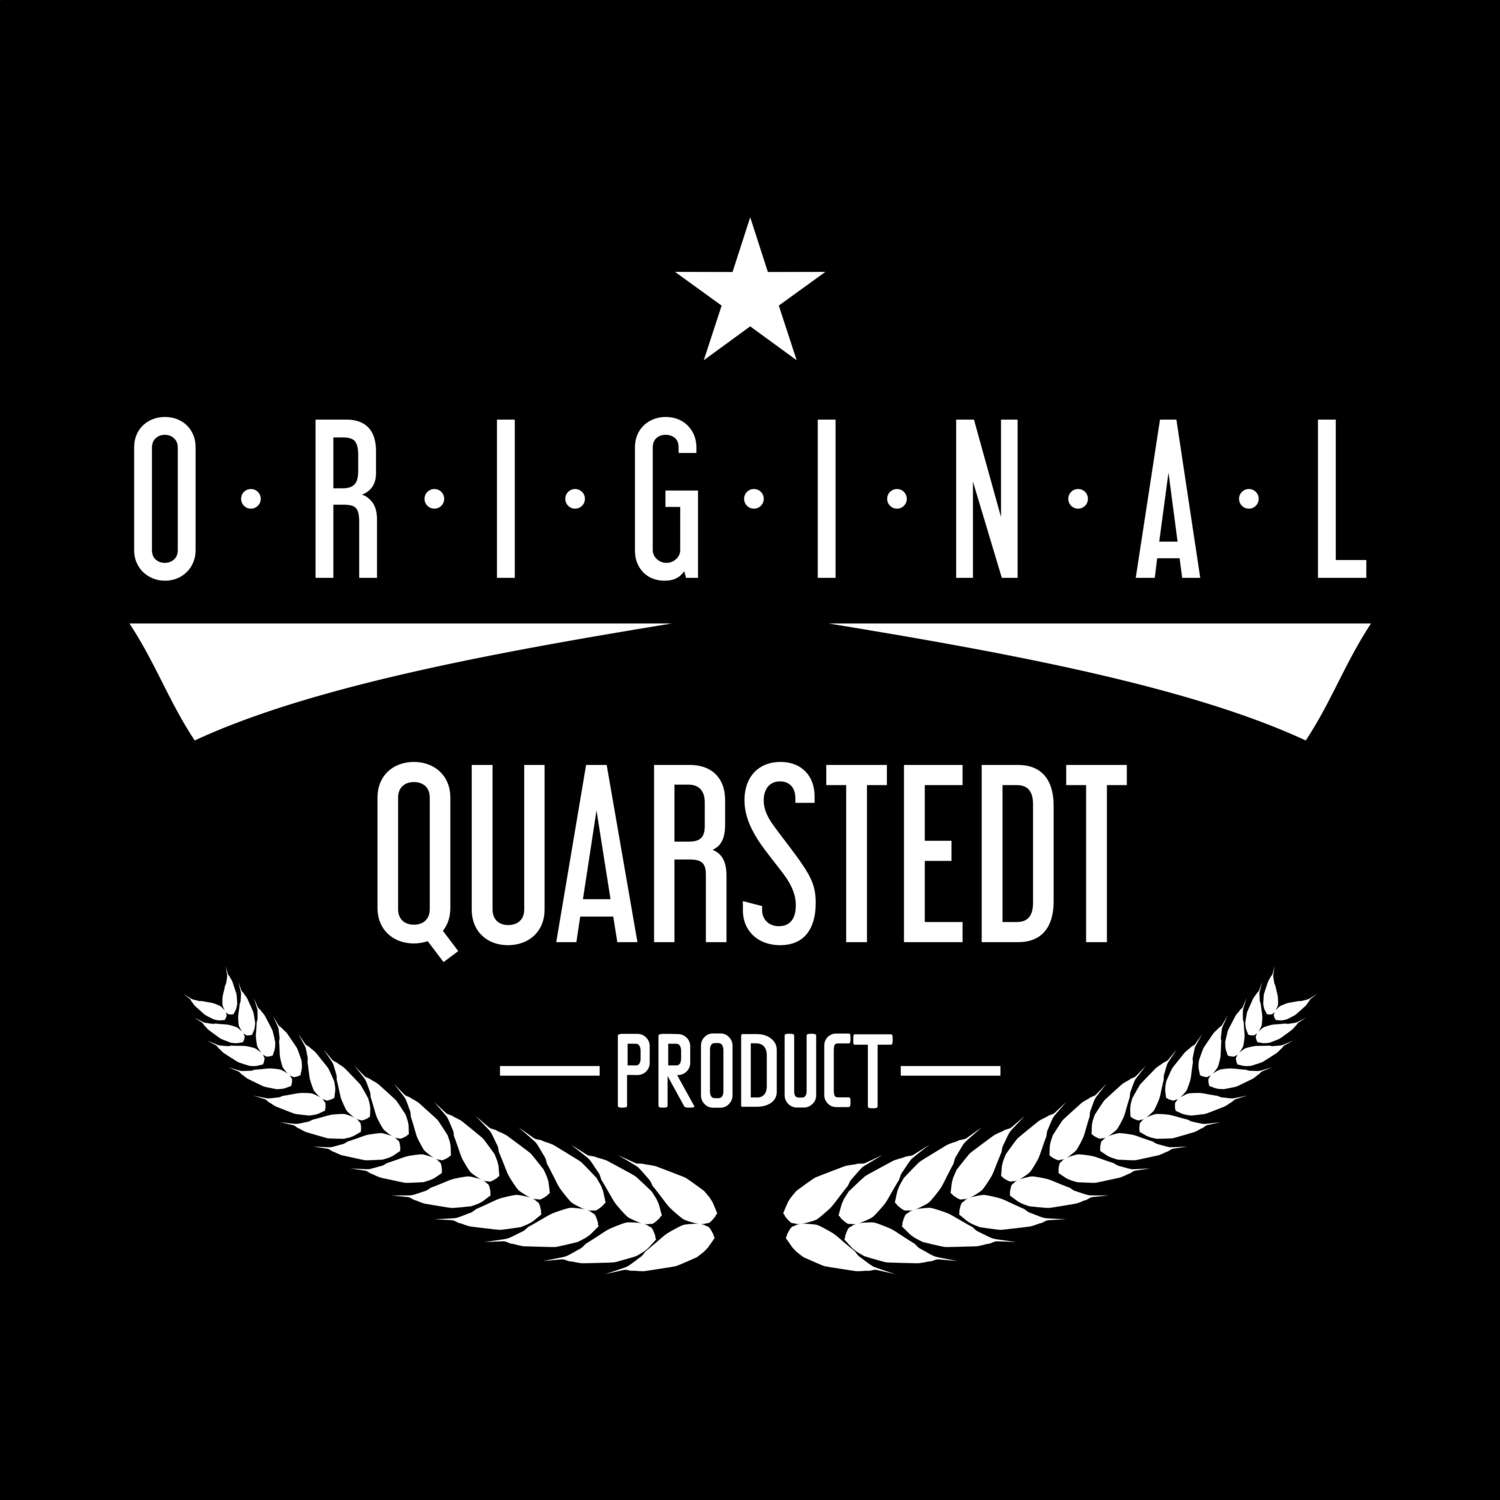 Quarstedt T-Shirt »Original Product«